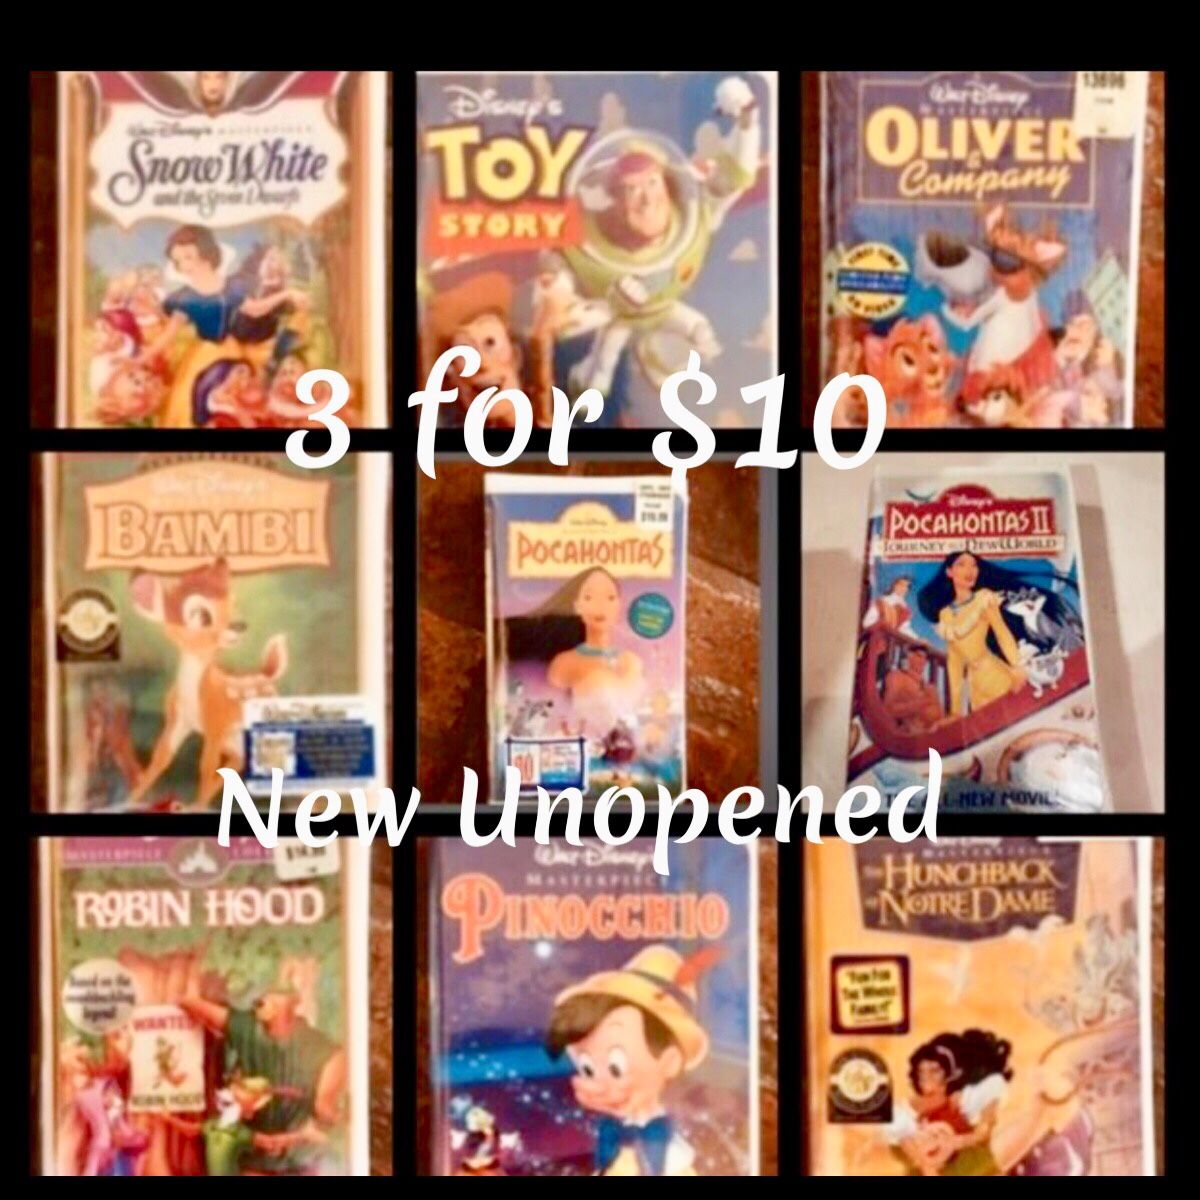 VTG-Disney Videos -Unopened. 3 for $10